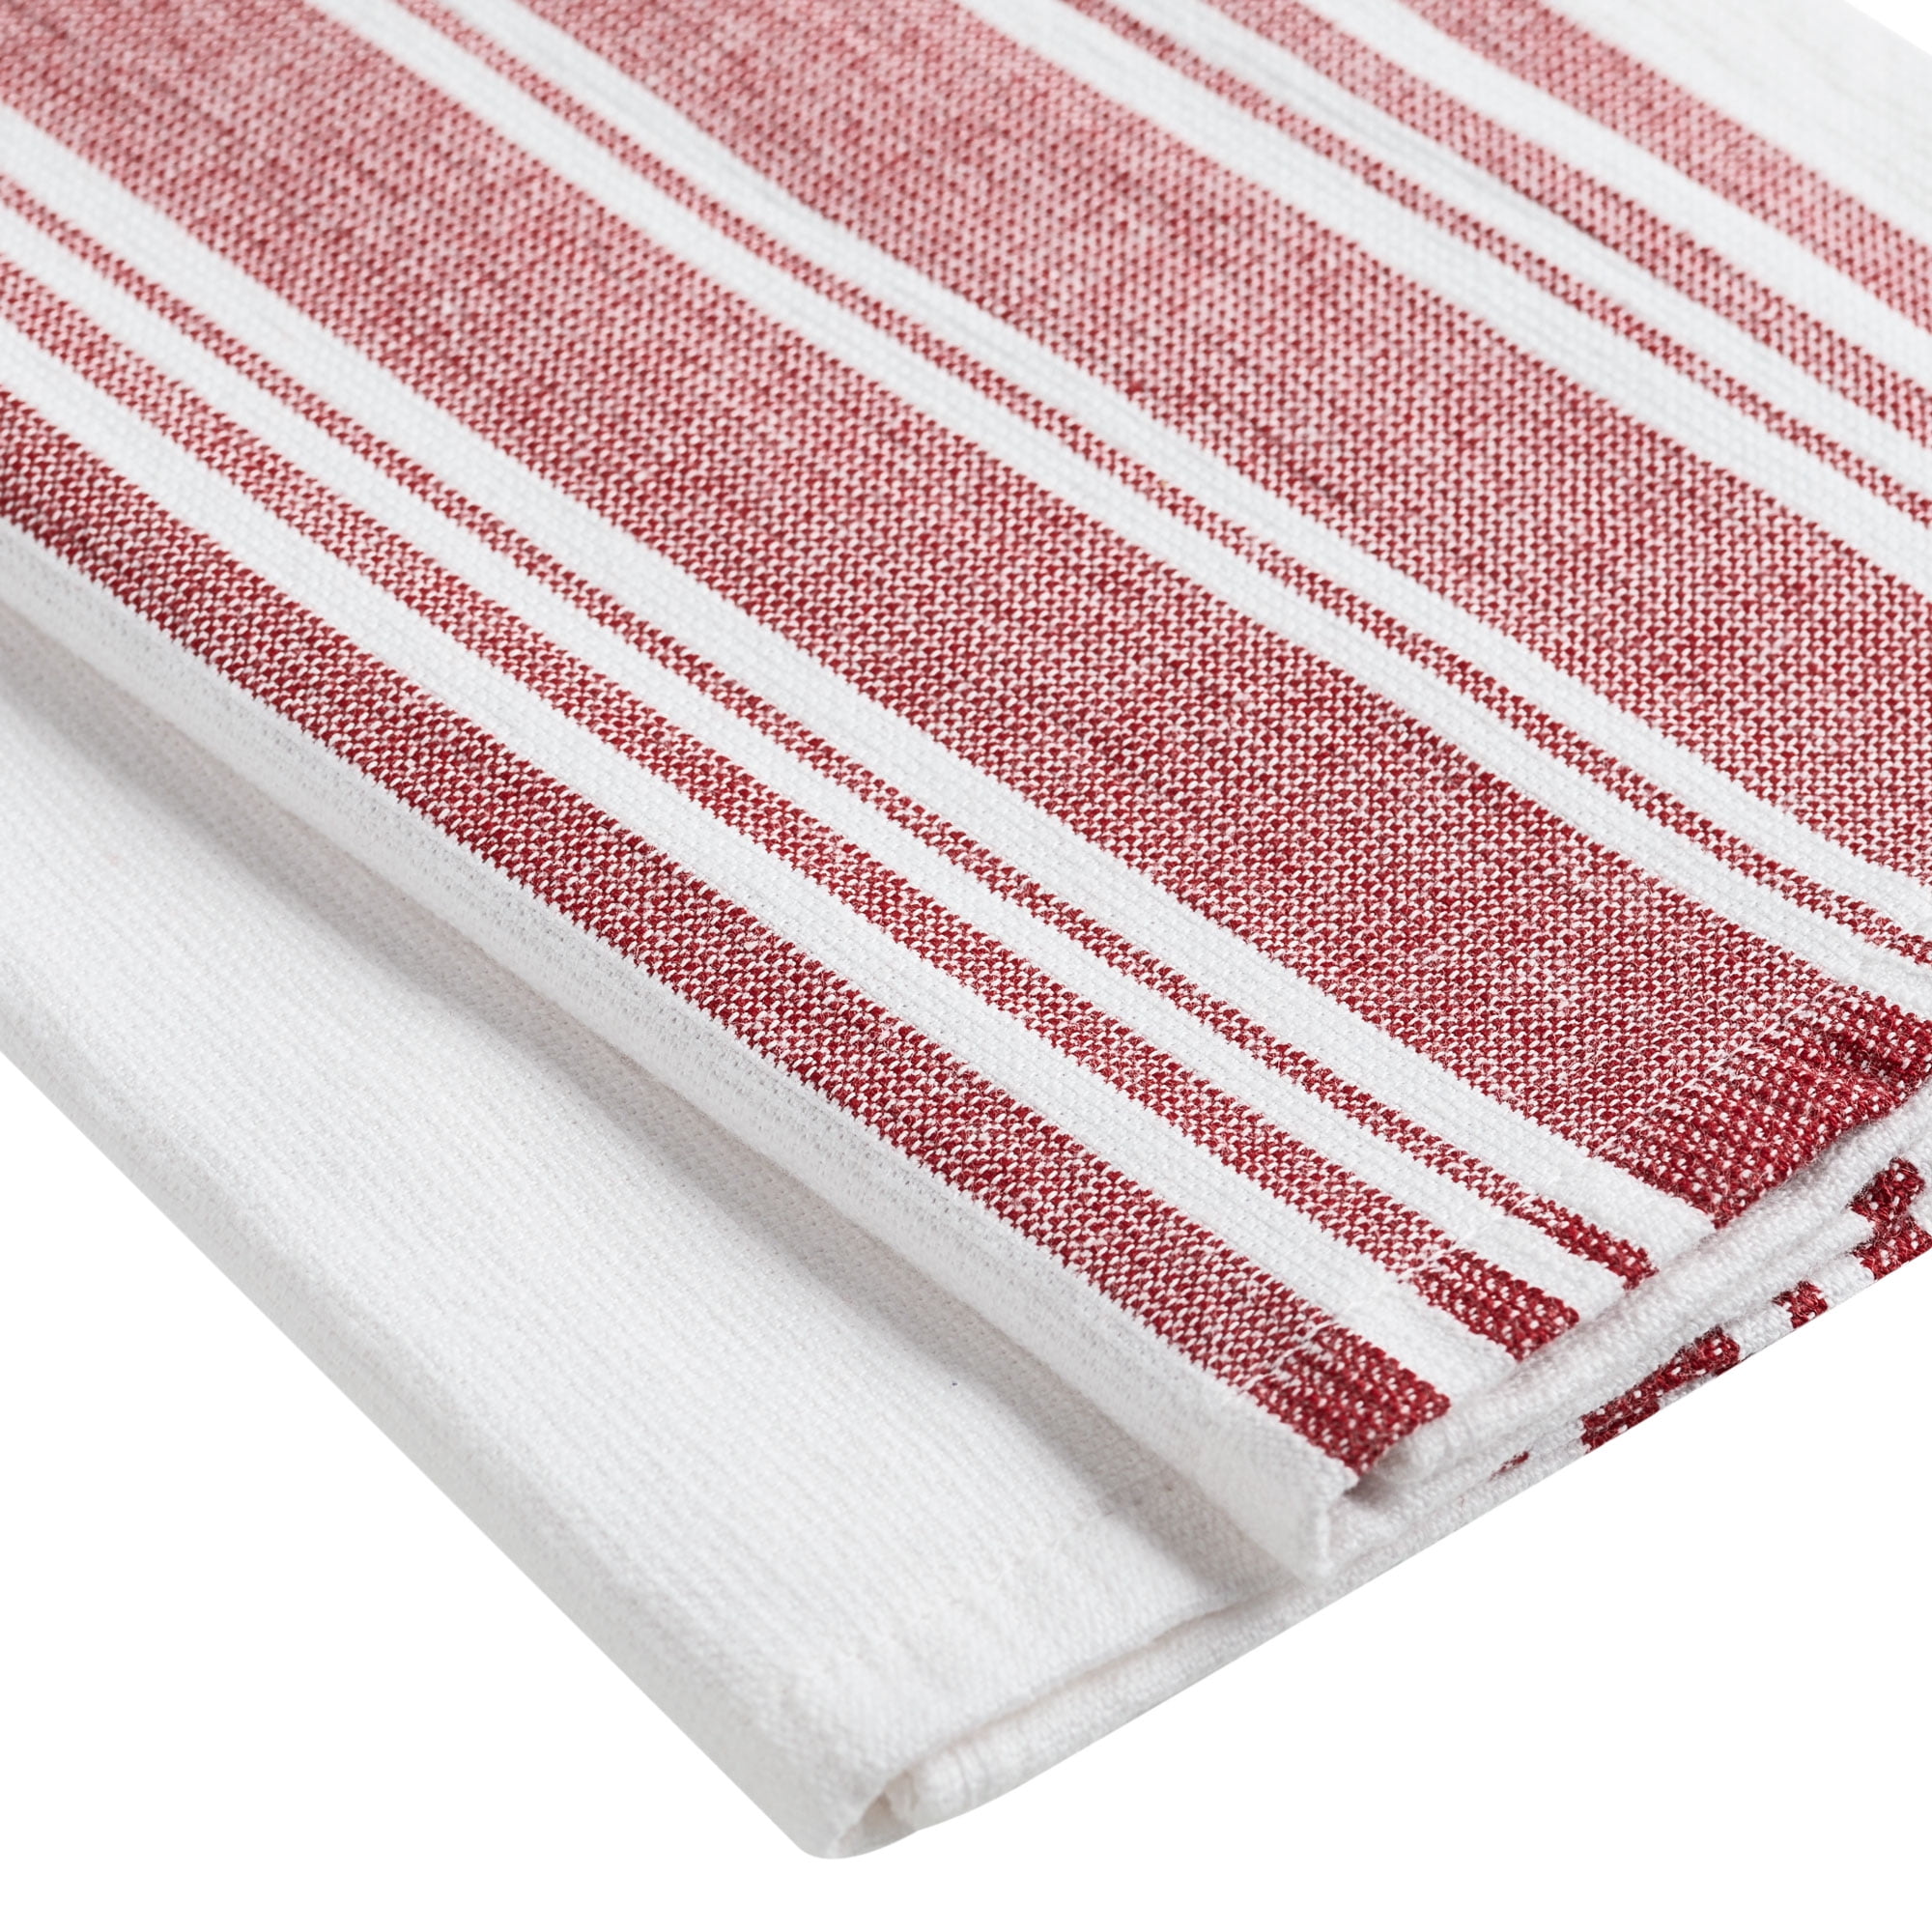 Decorative Towel Mid Century Modern Towels Set/3 100% Cotton Kitchen Clean  Up Mc08*Mc09*Mc02